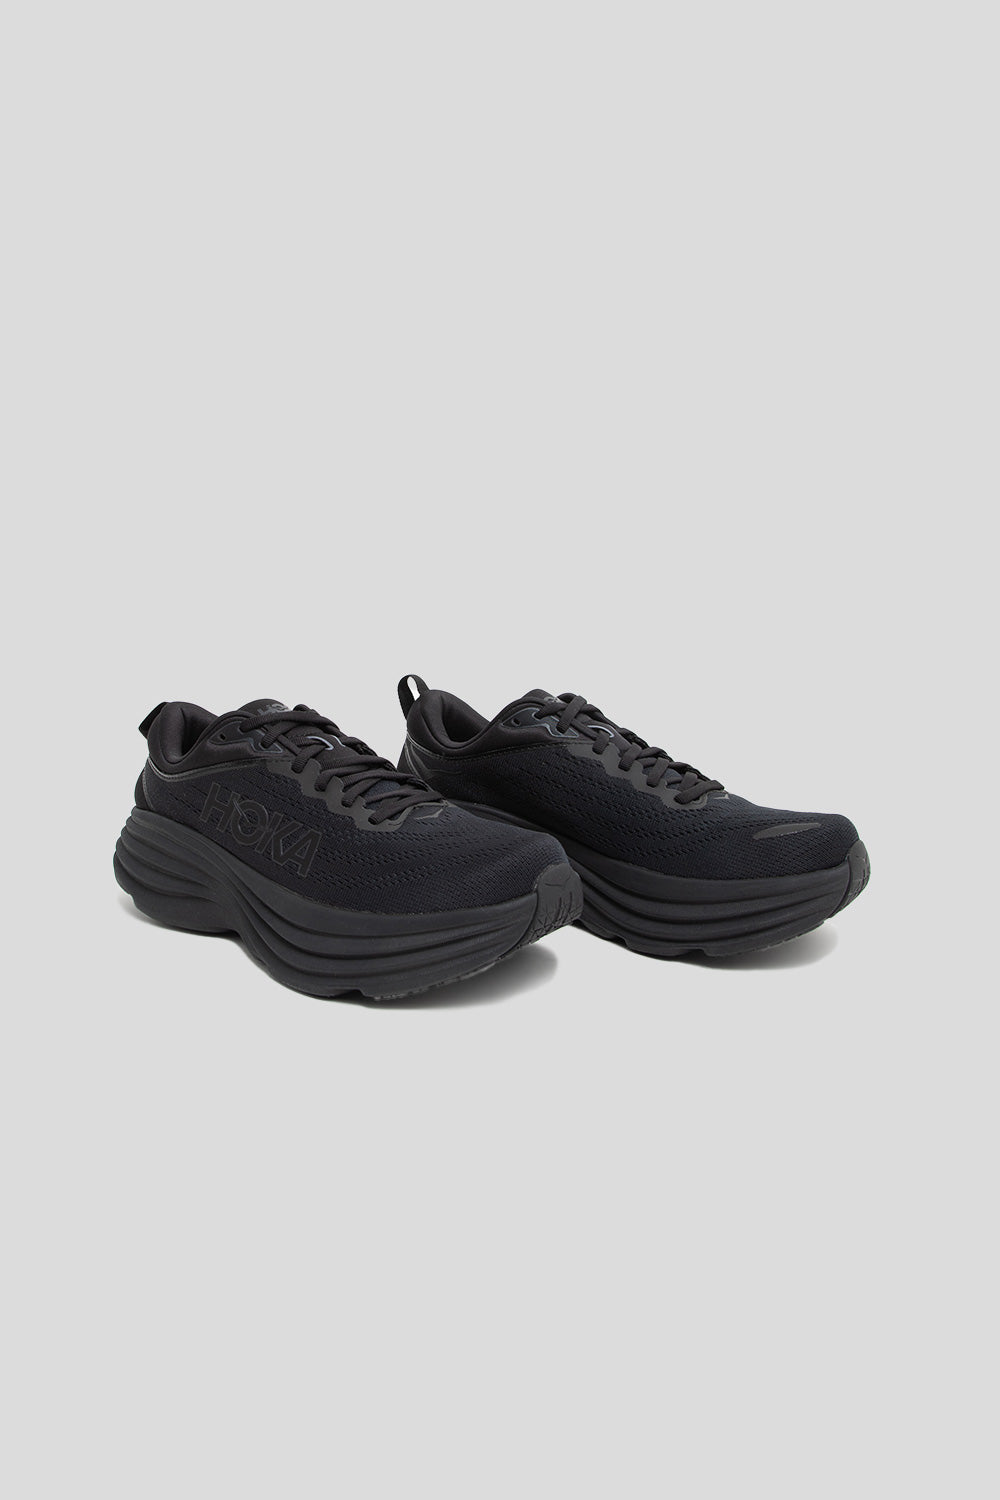 Hoka Bondi 8 Shoe in Black